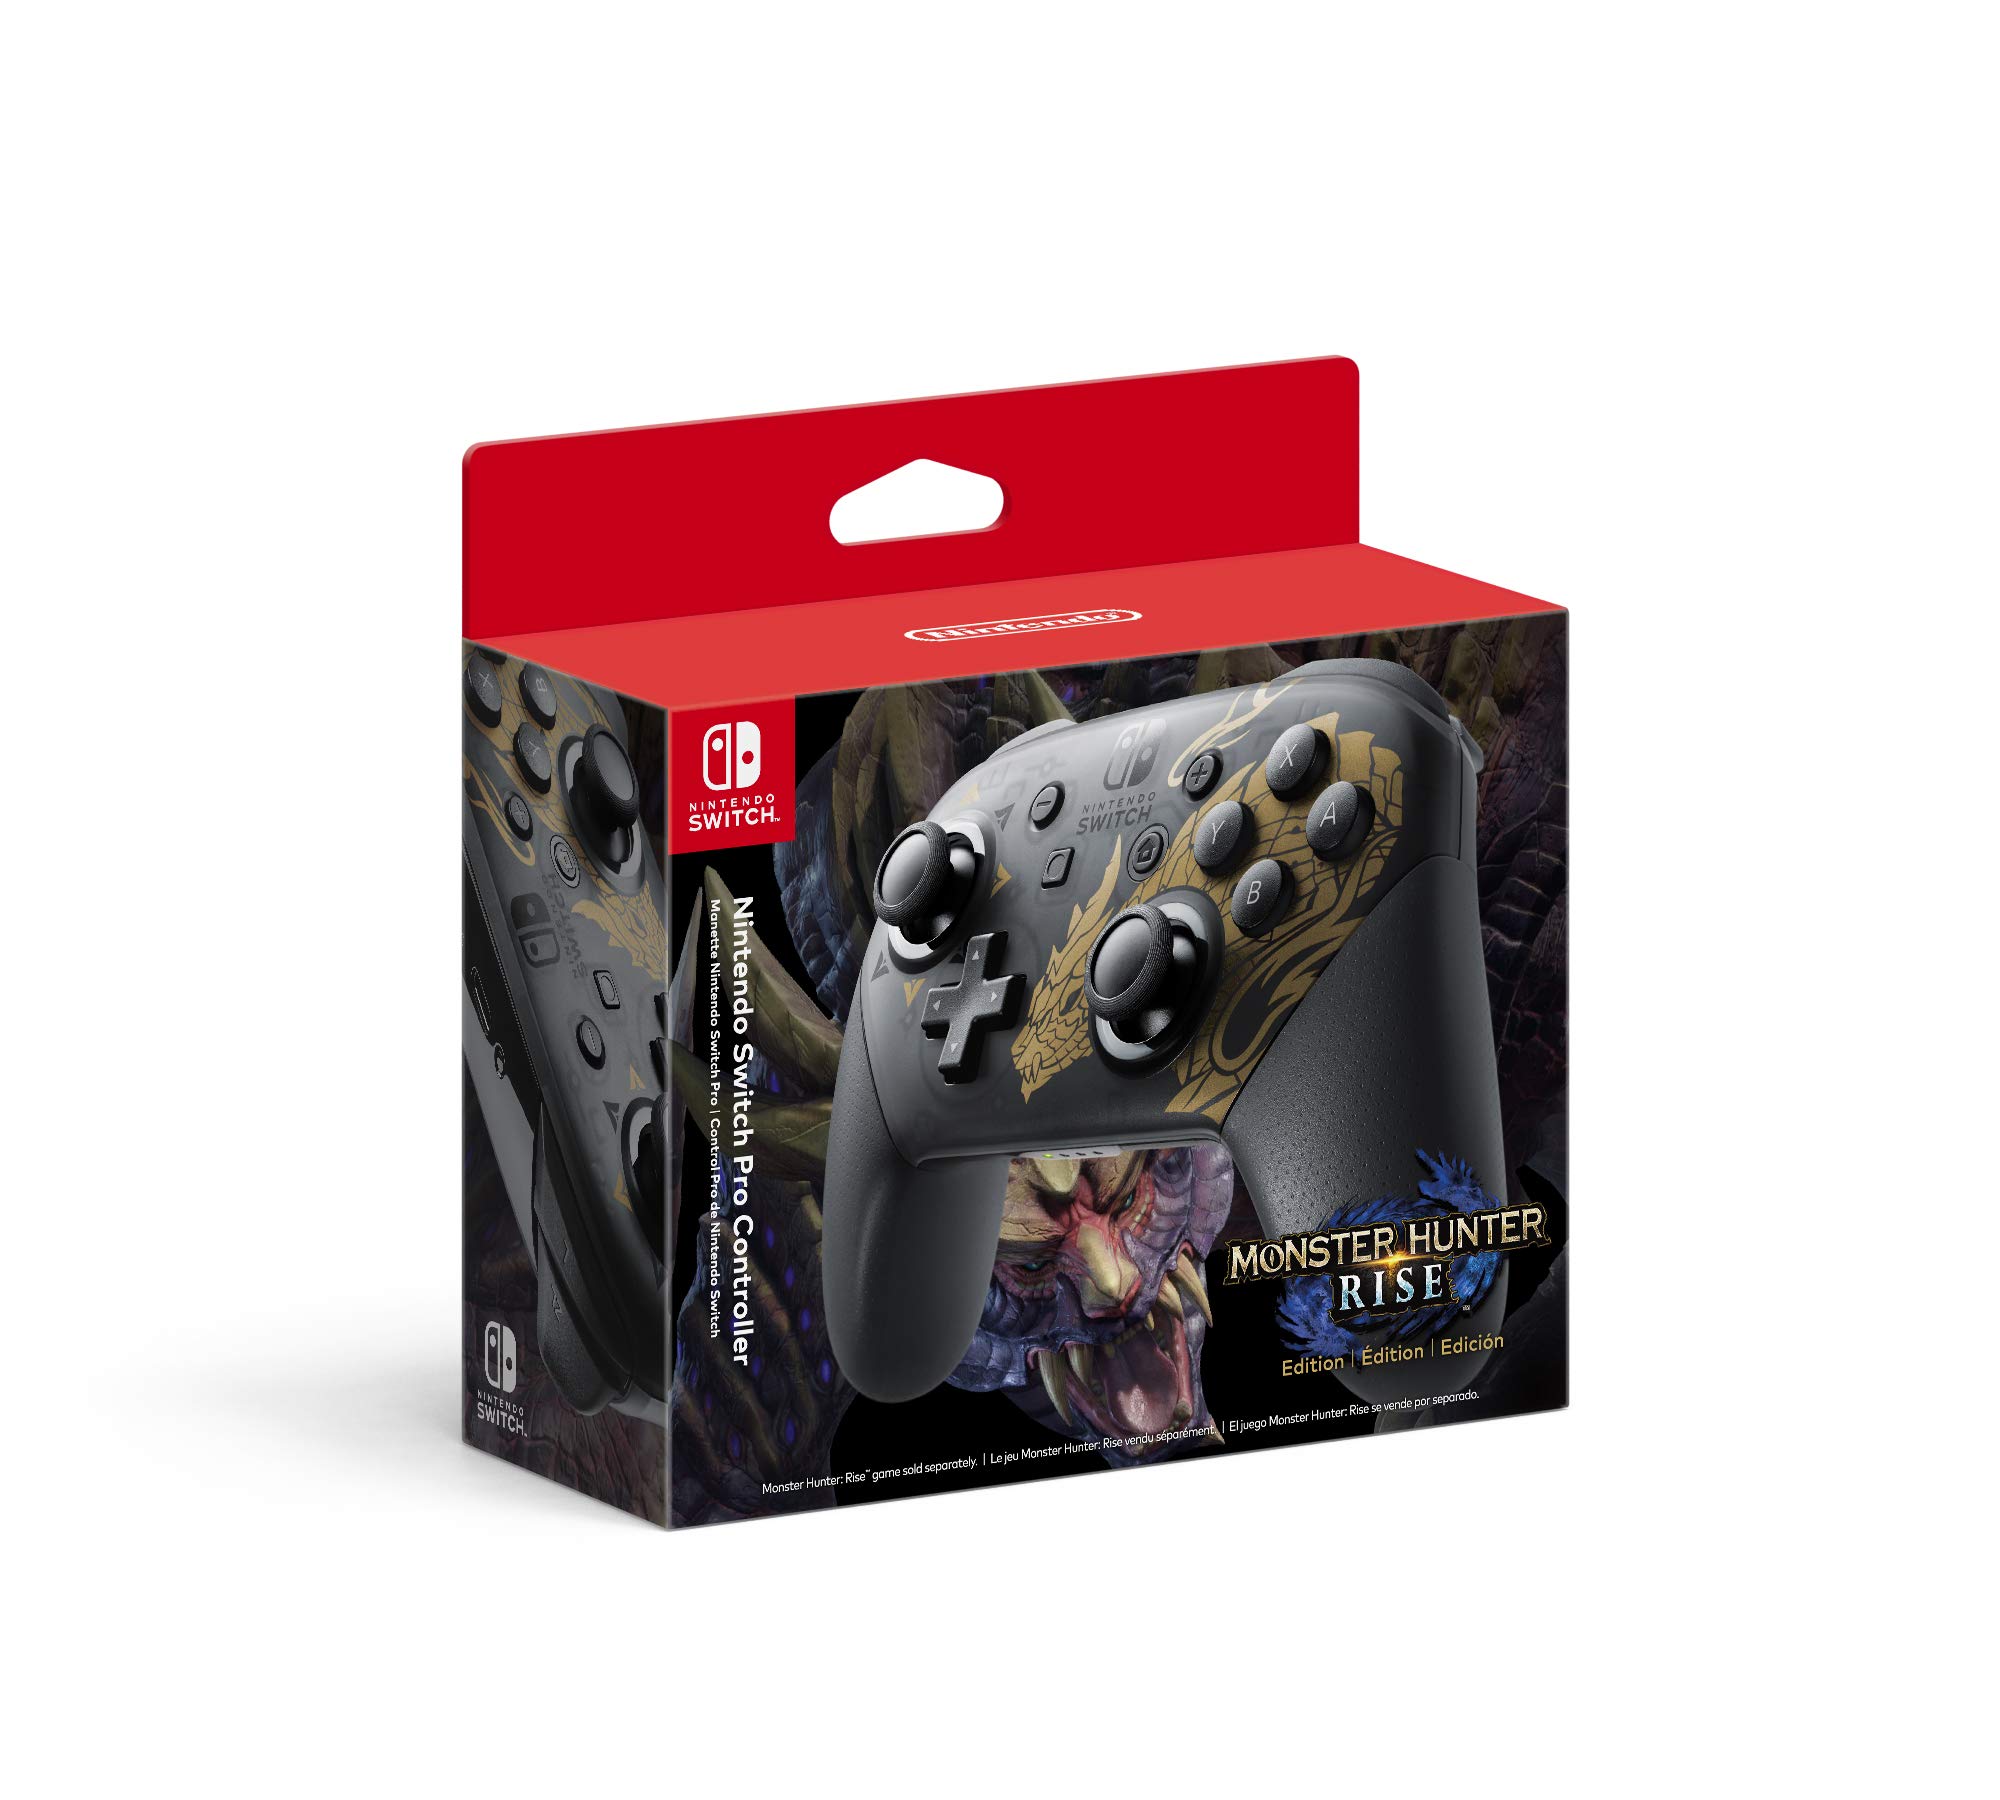 Monster Hunter Rise Pro Nintendo Switch Controller $74.99